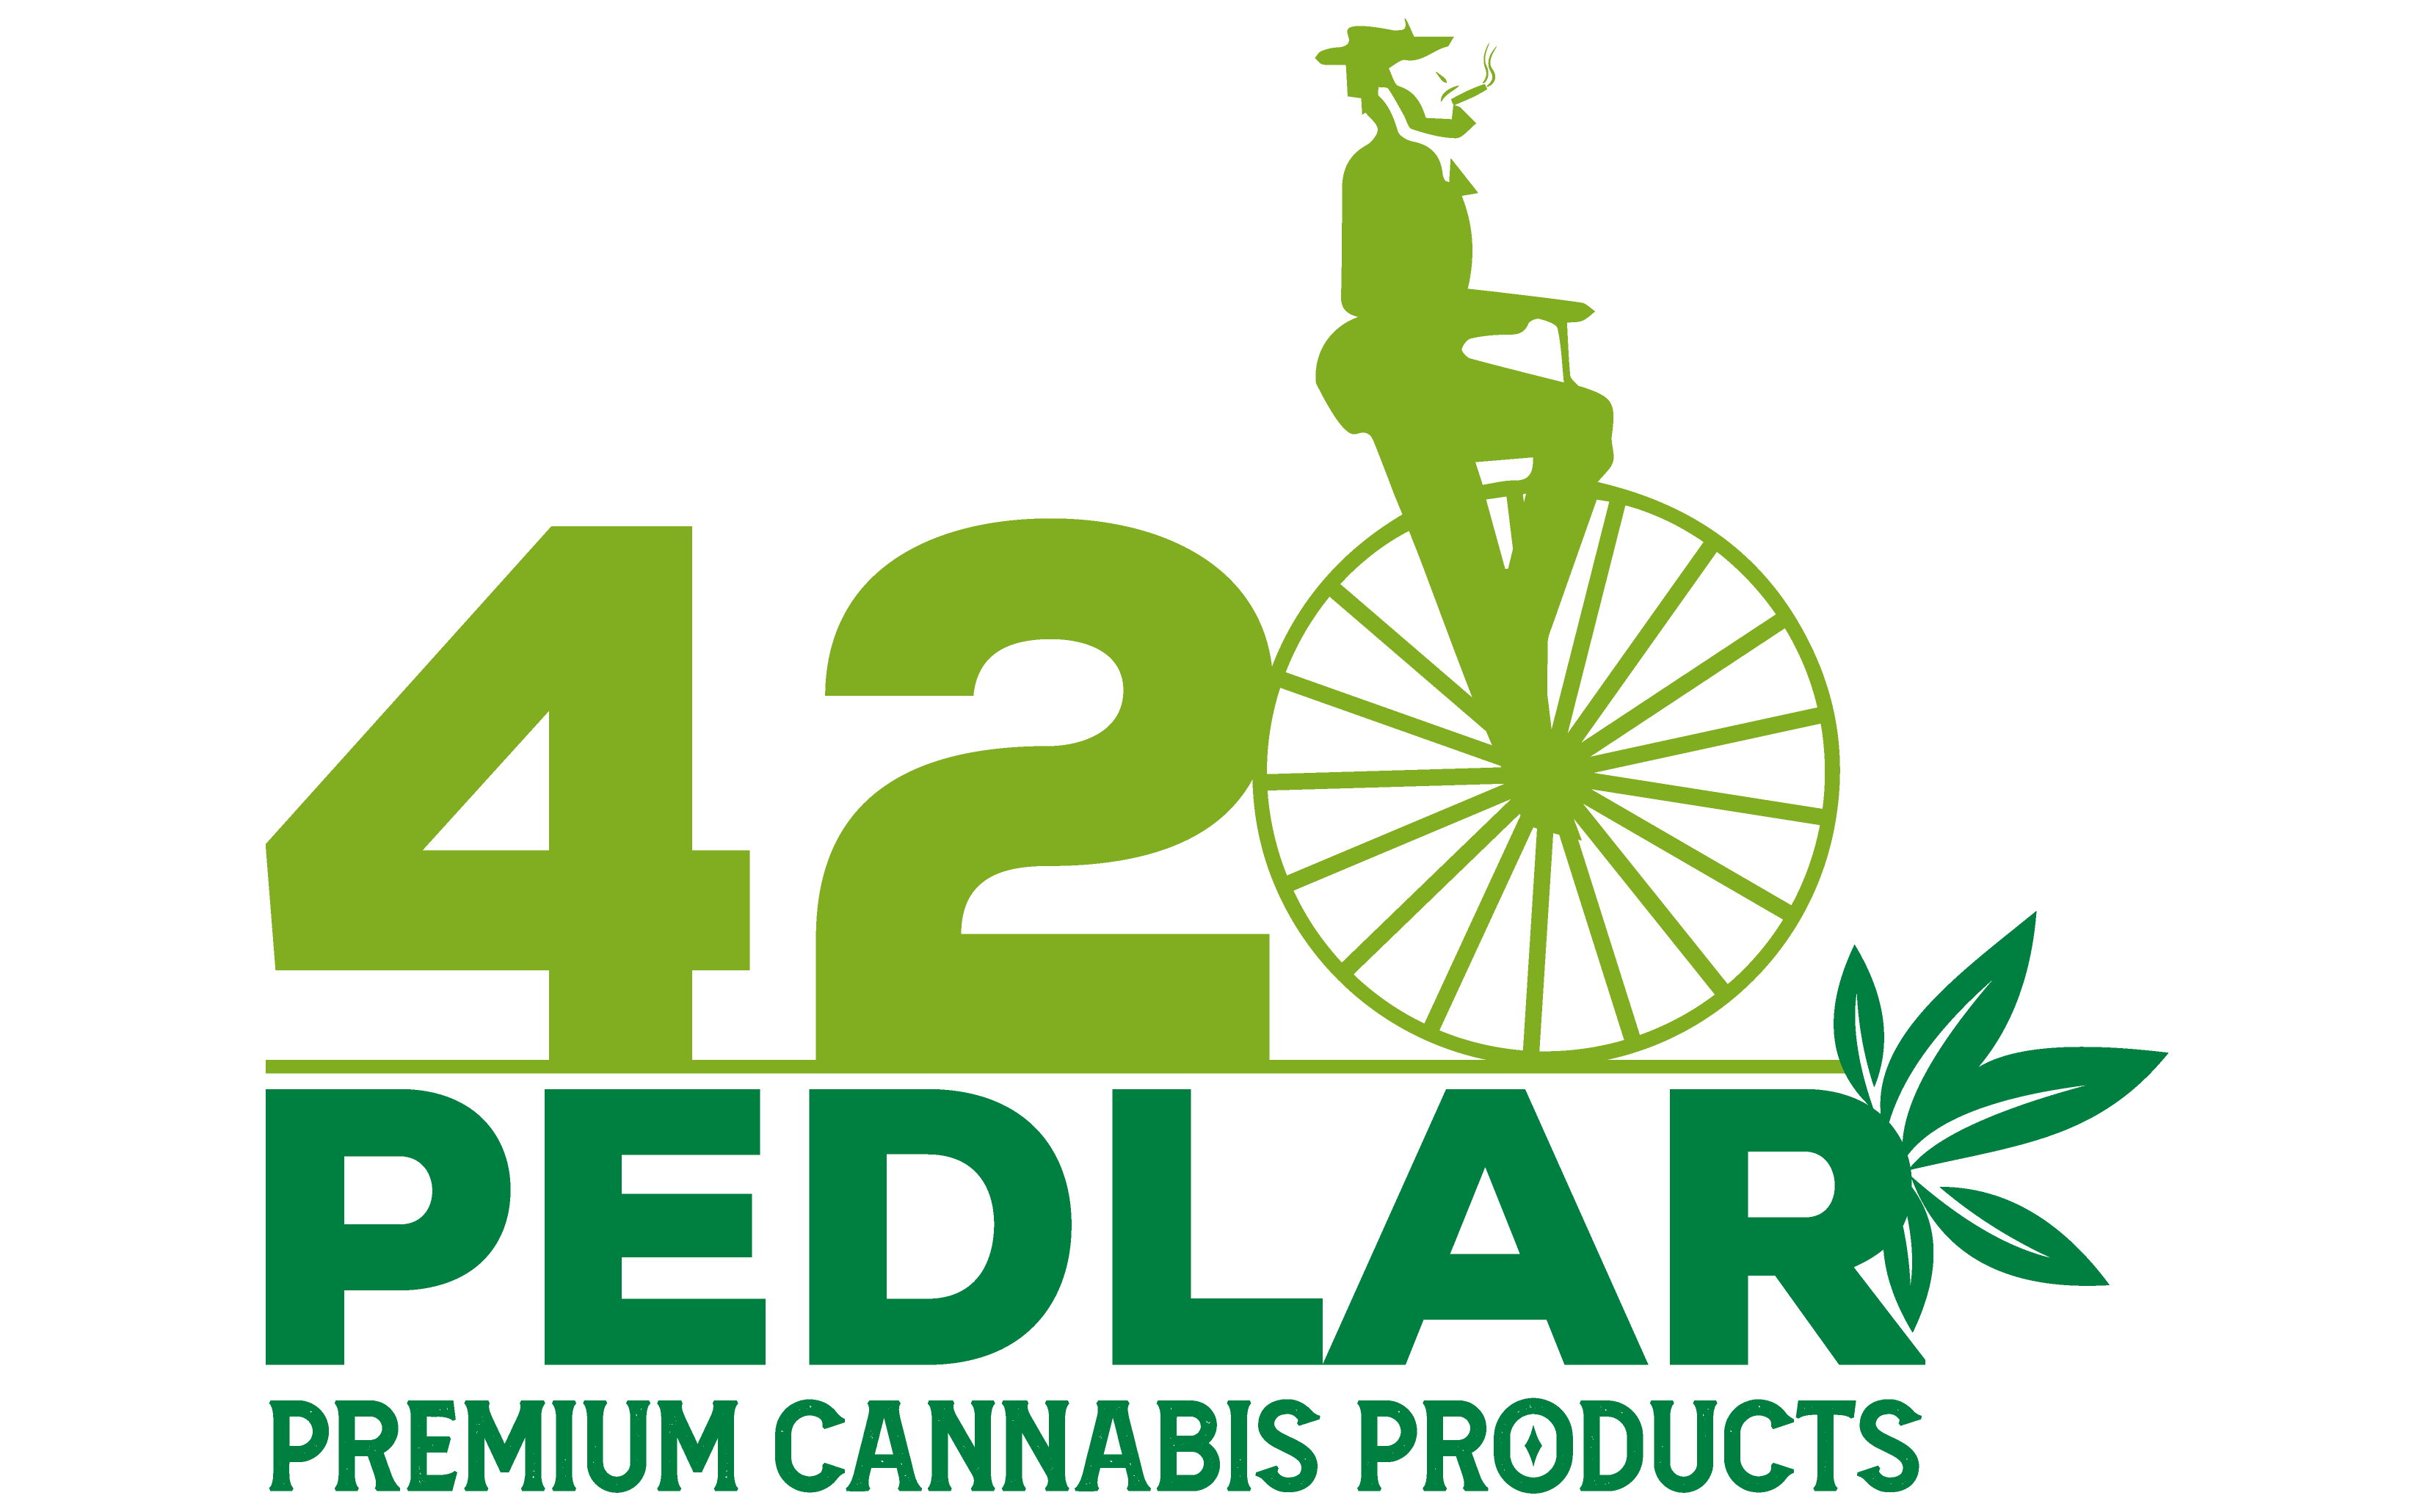 420 Pedlar Final logo